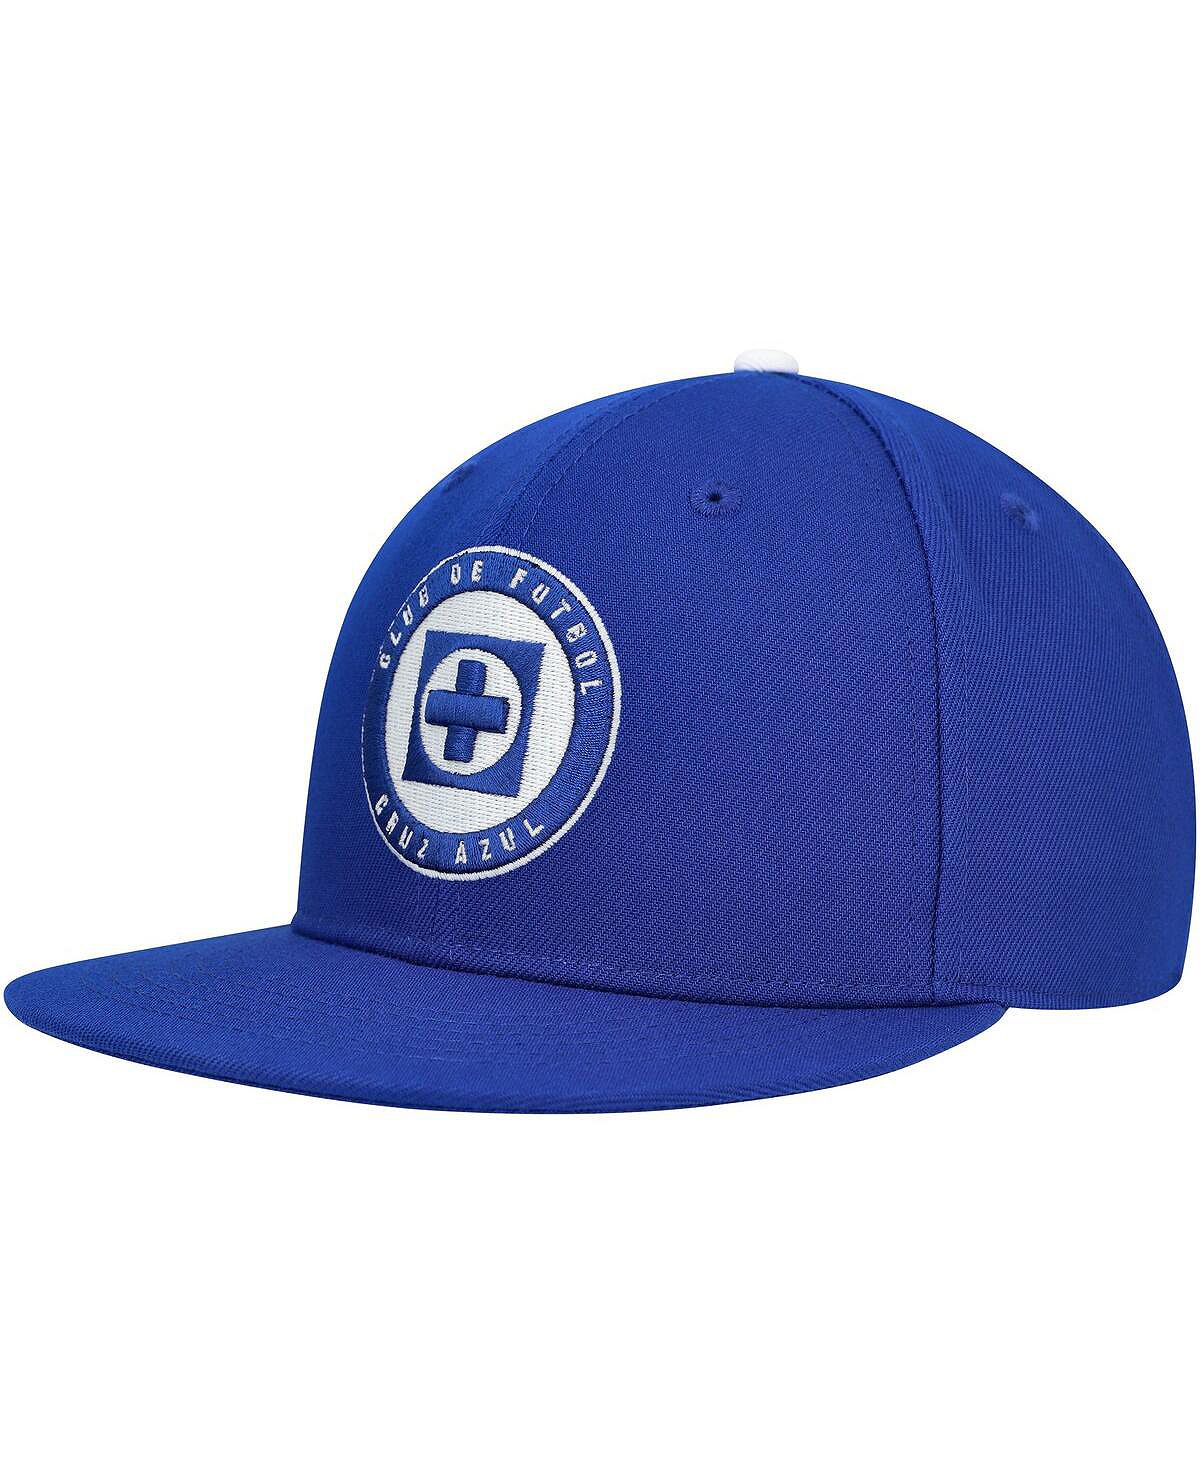 мужская синяя регулируемая шляпа cruz azul club gold fan ink Мужская кепка Snapback Royal Cruz Azul America's Game Fan Ink